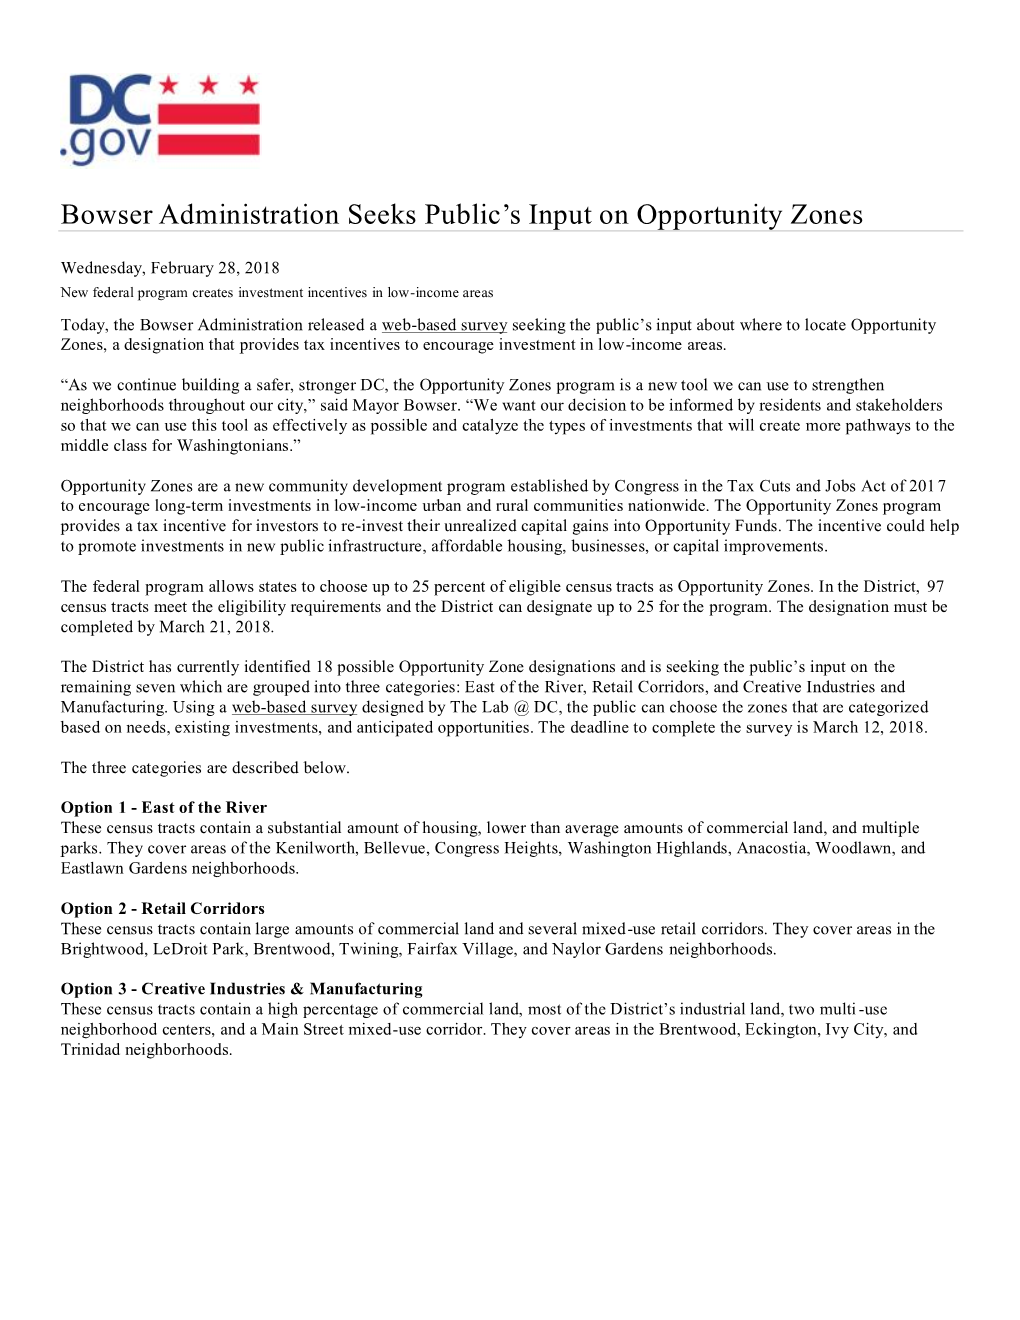 Washington, D.C. Bowser Administration Seeks Public's Input on Opportunity Zones